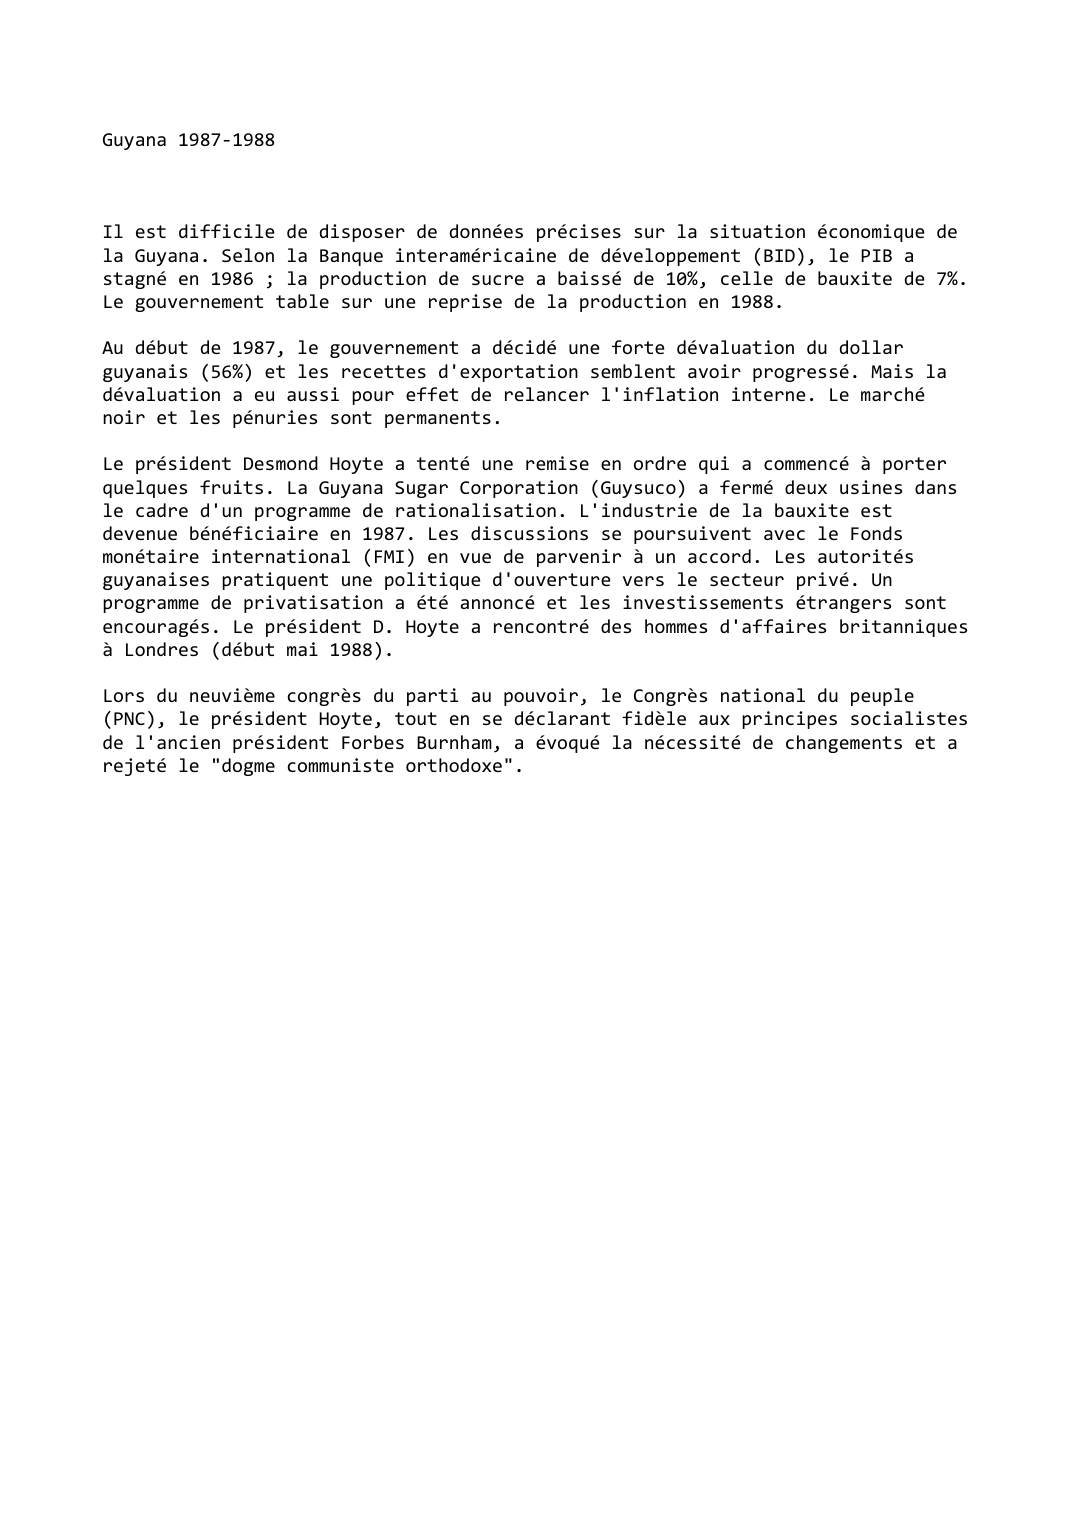 Prévisualisation du document Guyana (1987-1988)